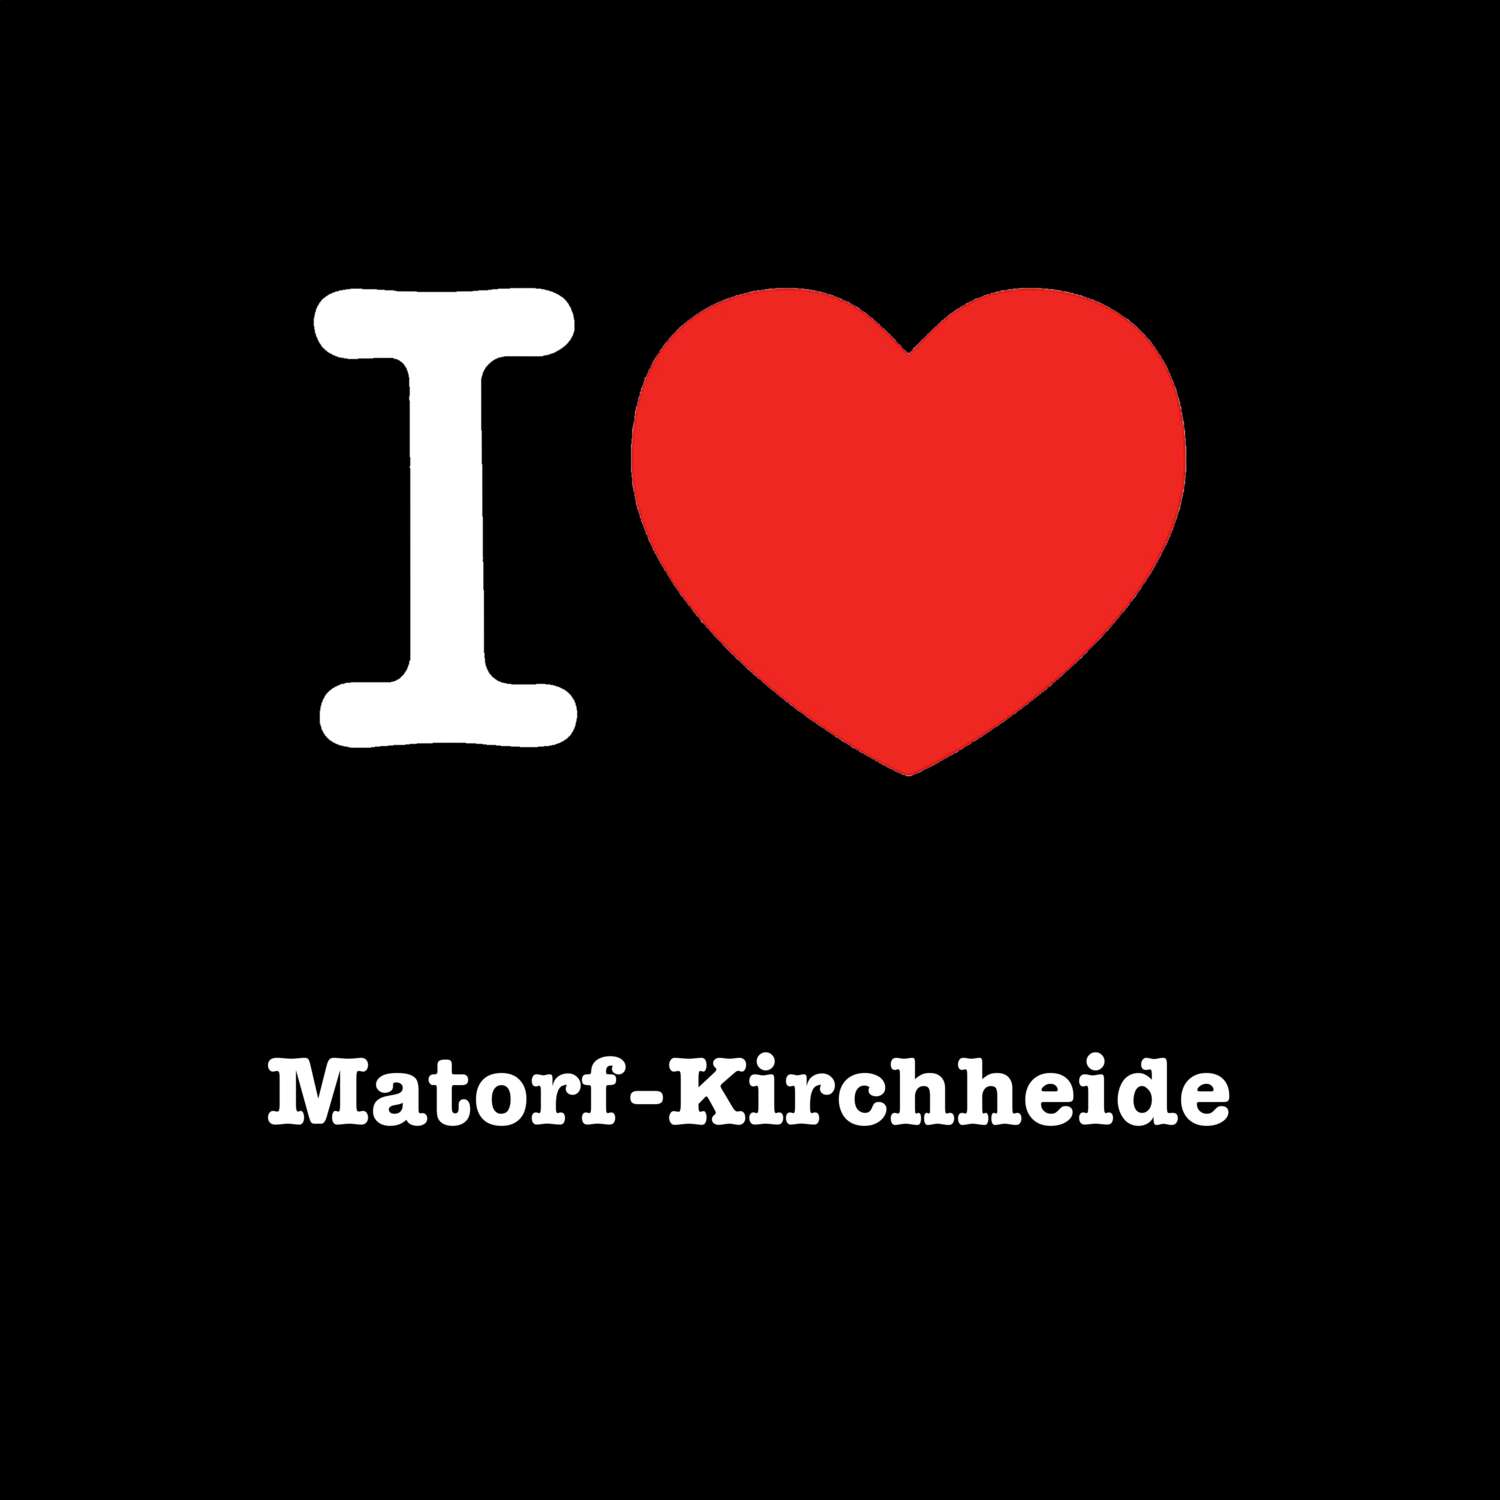 Matorf-Kirchheide T-Shirt »I love«